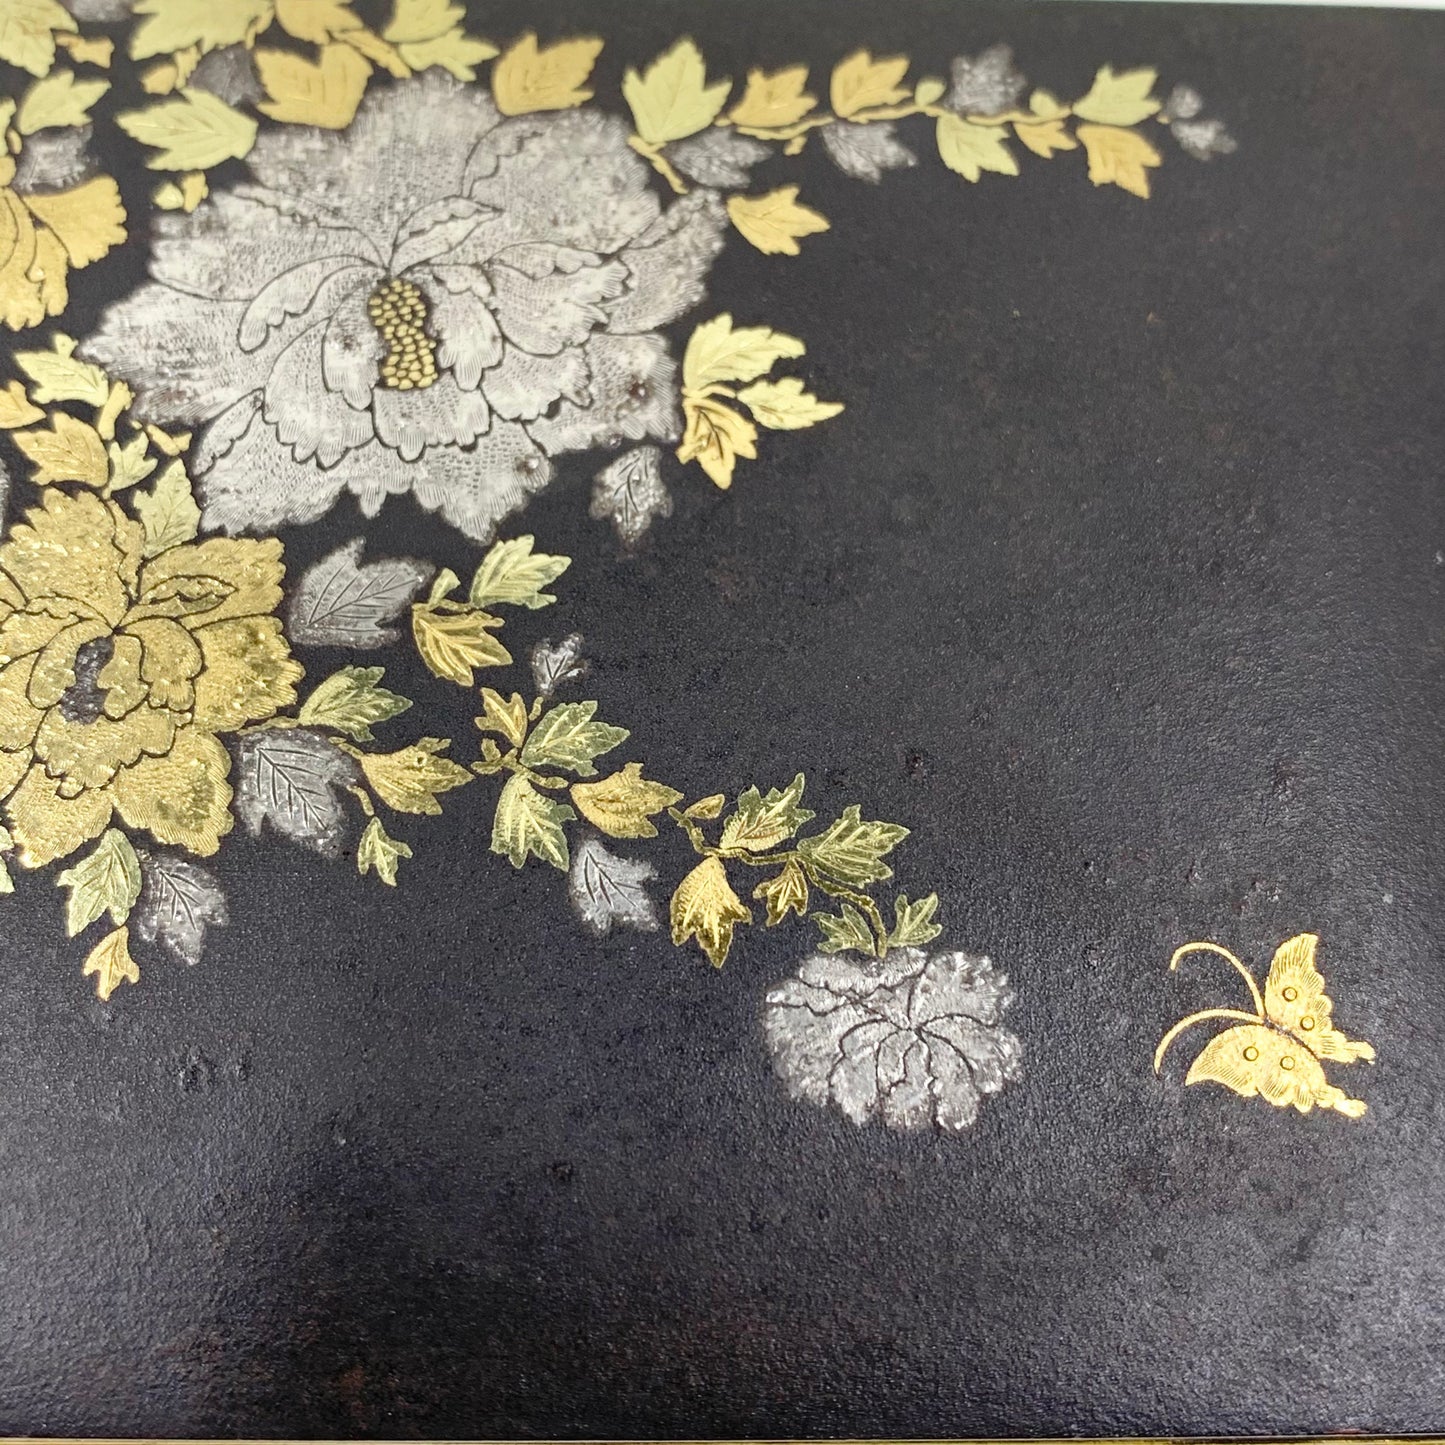 Vintage Japanese Amita Damascene Iron Box | Amita Japan Damascene Komai Style Box | Gold and Silver Inlay